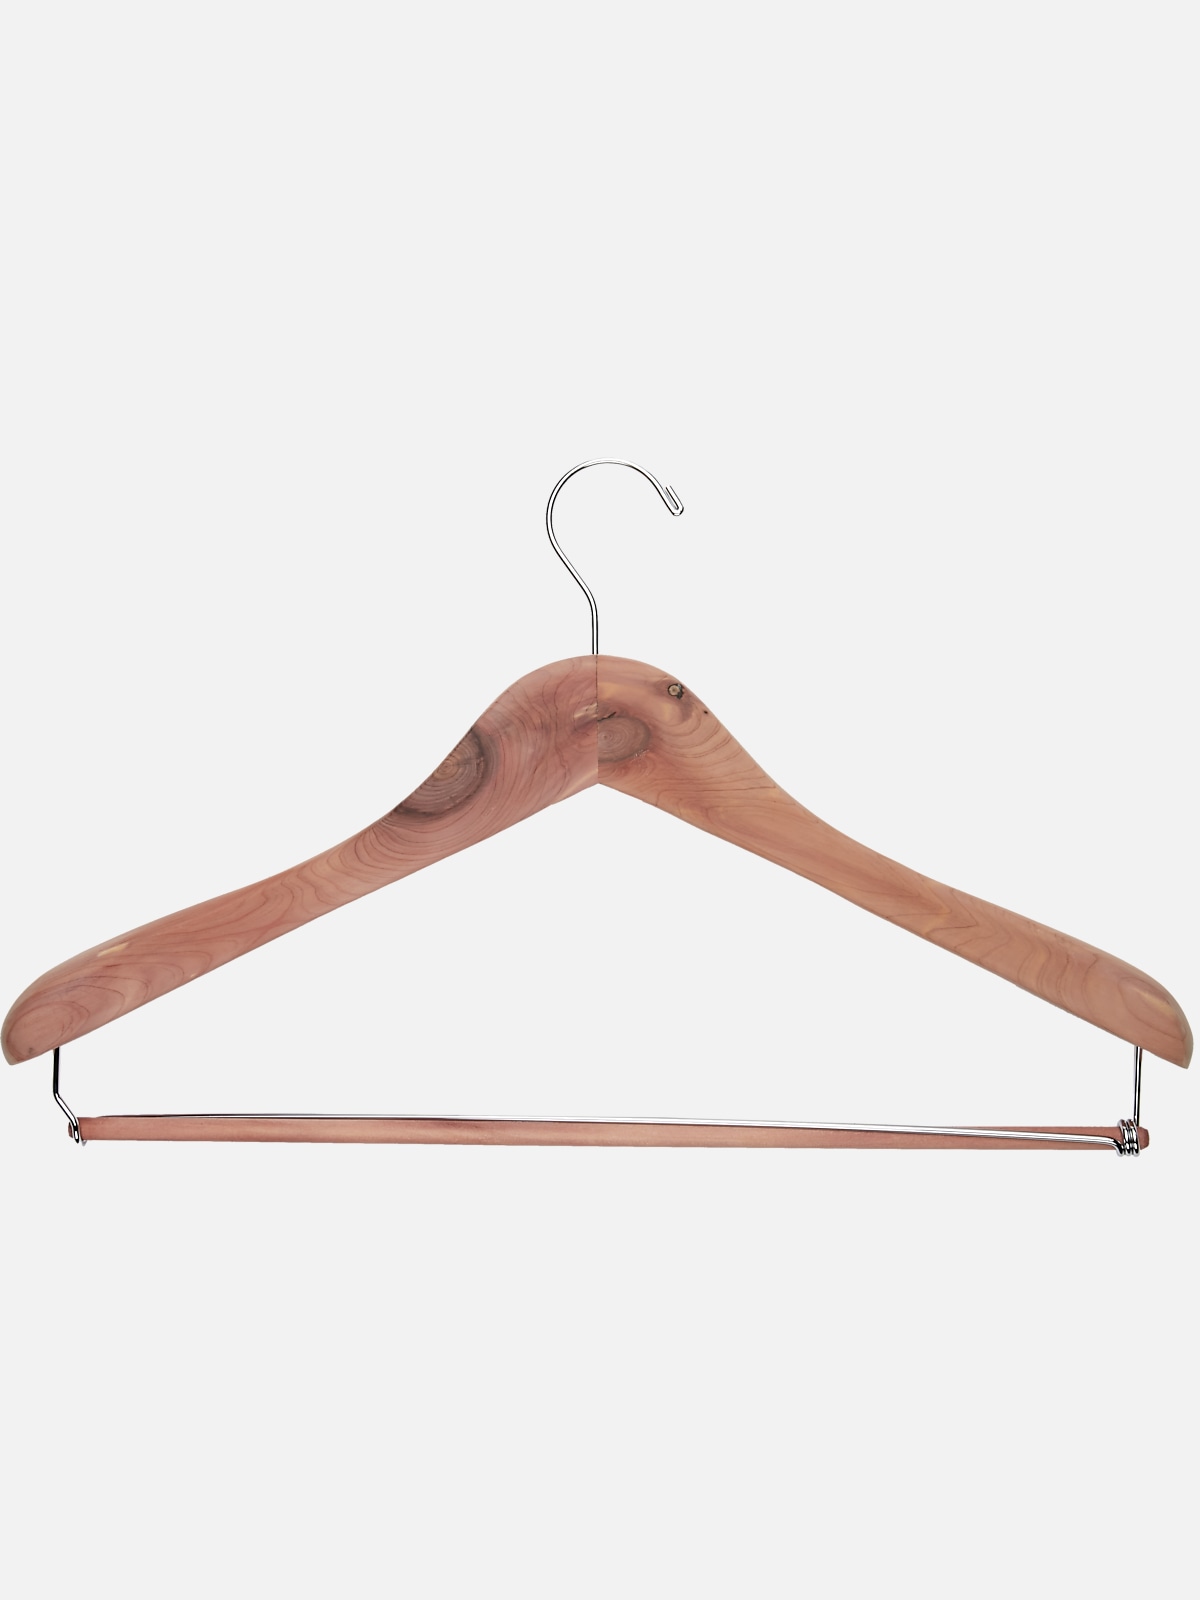 Cedar Pant Hanger Set of 3 - Woodlore Cedar Products